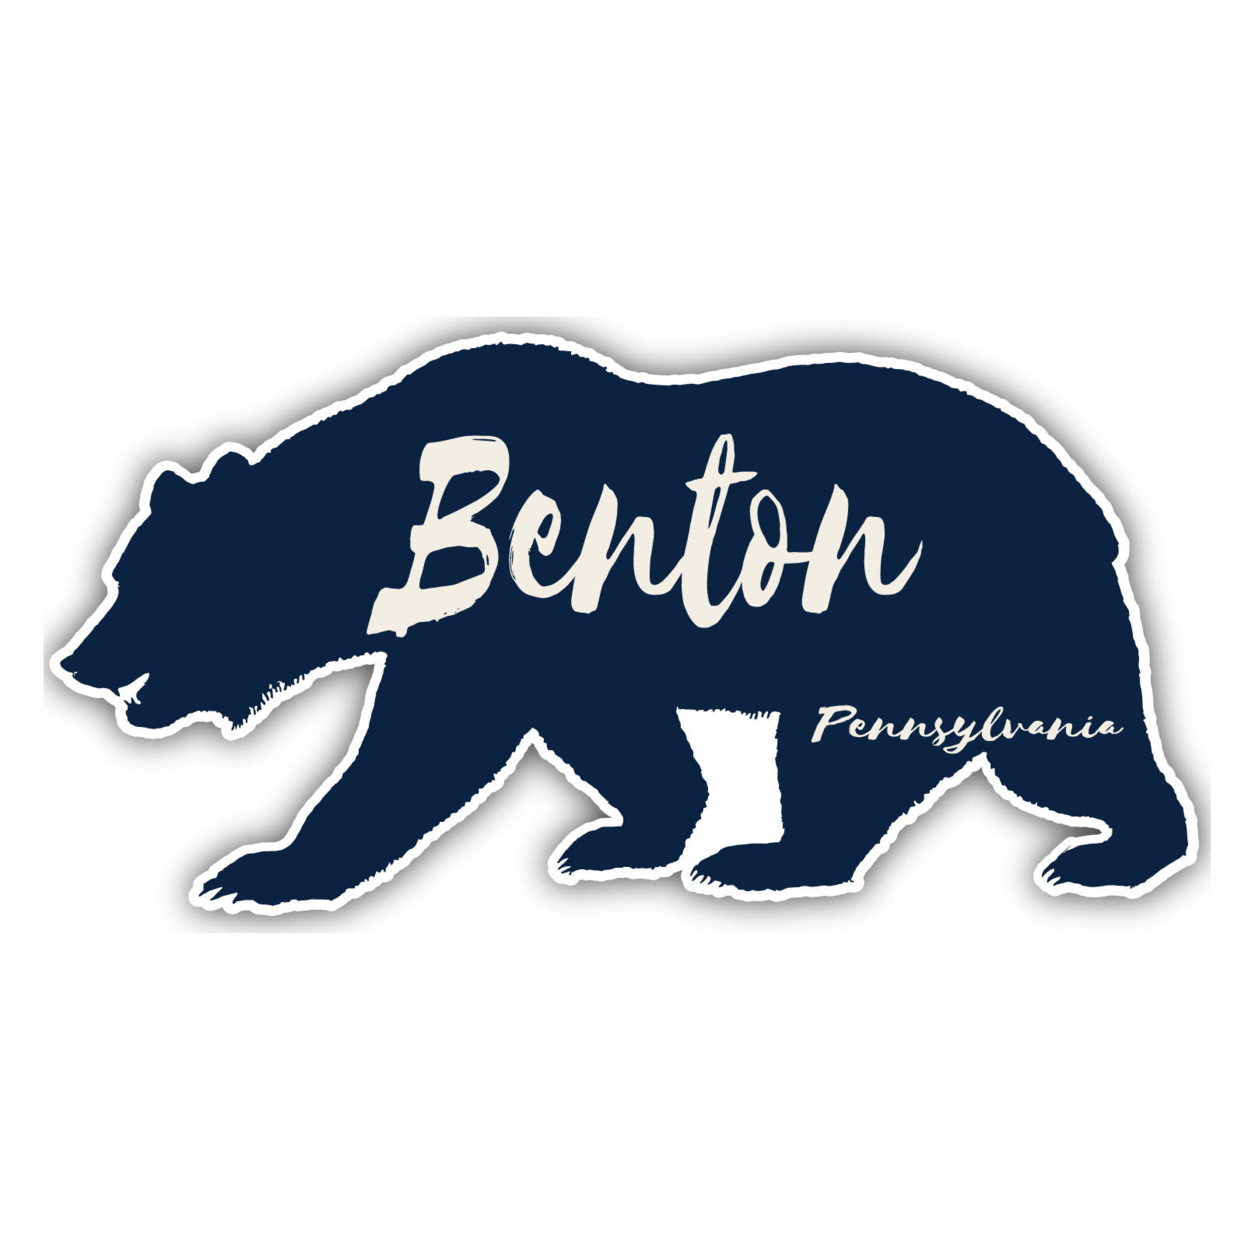 Benton Pennsylvania Souvenir Decorative Stickers (Choose Theme And Size) - 4-Pack, 2-Inch, Bear